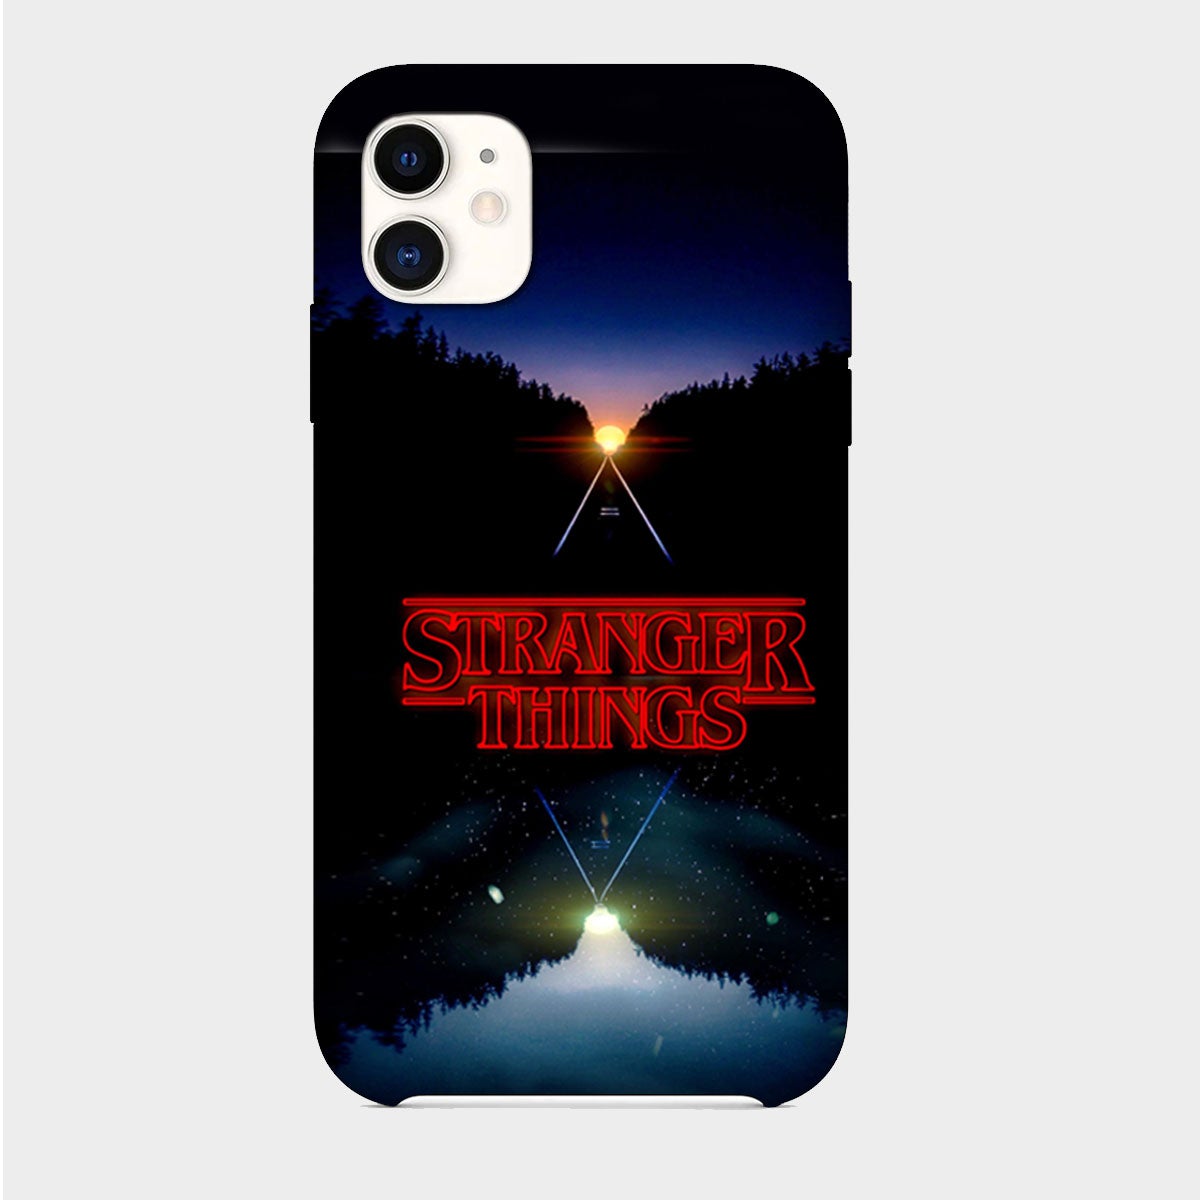 Stranger Games - Mobile Phone Cover - Hard Case